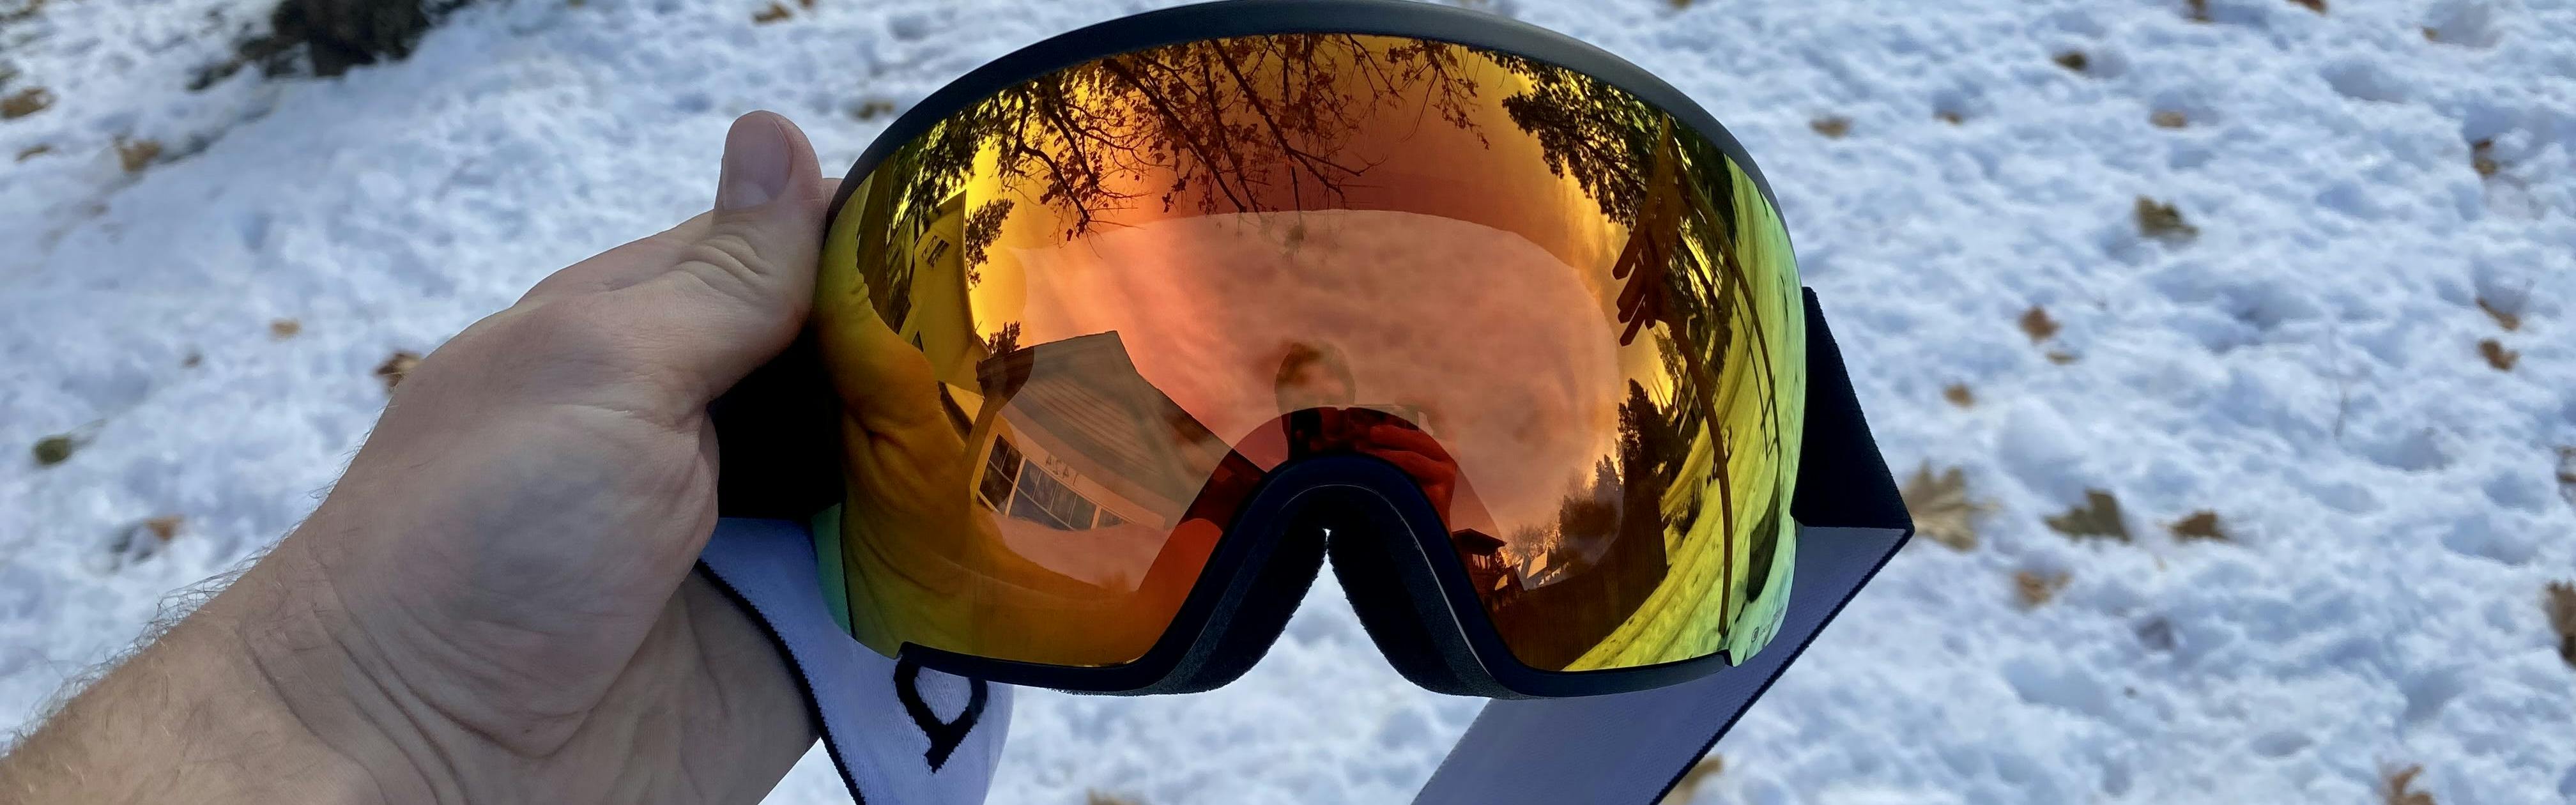 POC ski goggles Fovea Mid Clarity Black